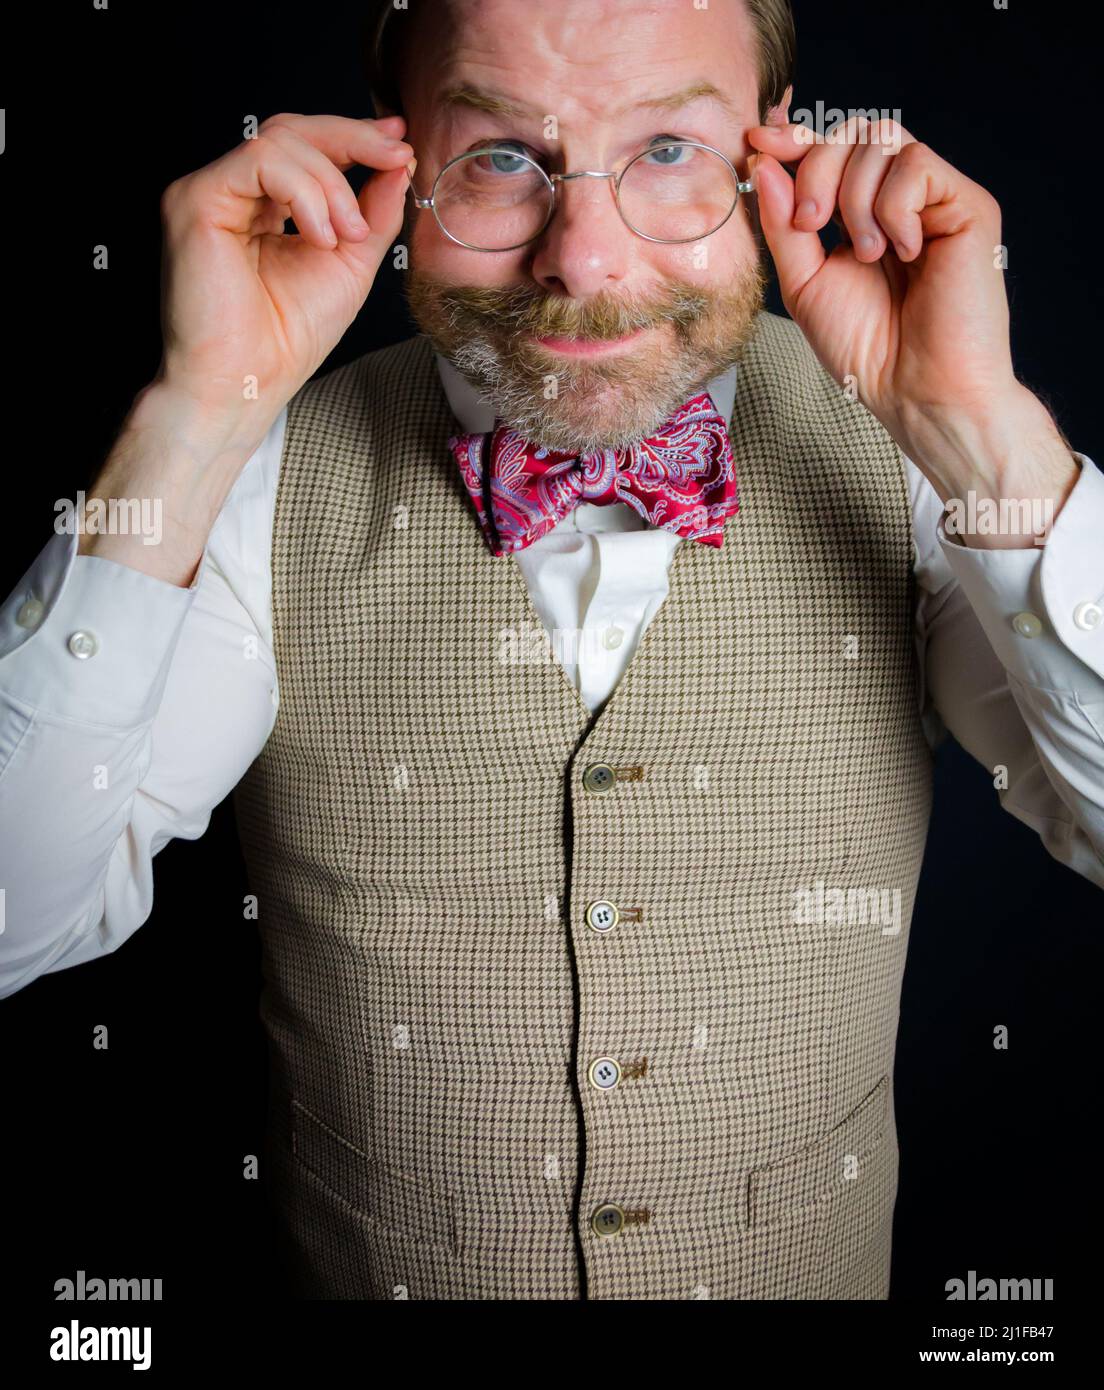 Portrait of Kindly Mature Man in Vest and Bow Tie Adjusting Eyeglasses. Sweet Smiling Gentleman. Stock Photo